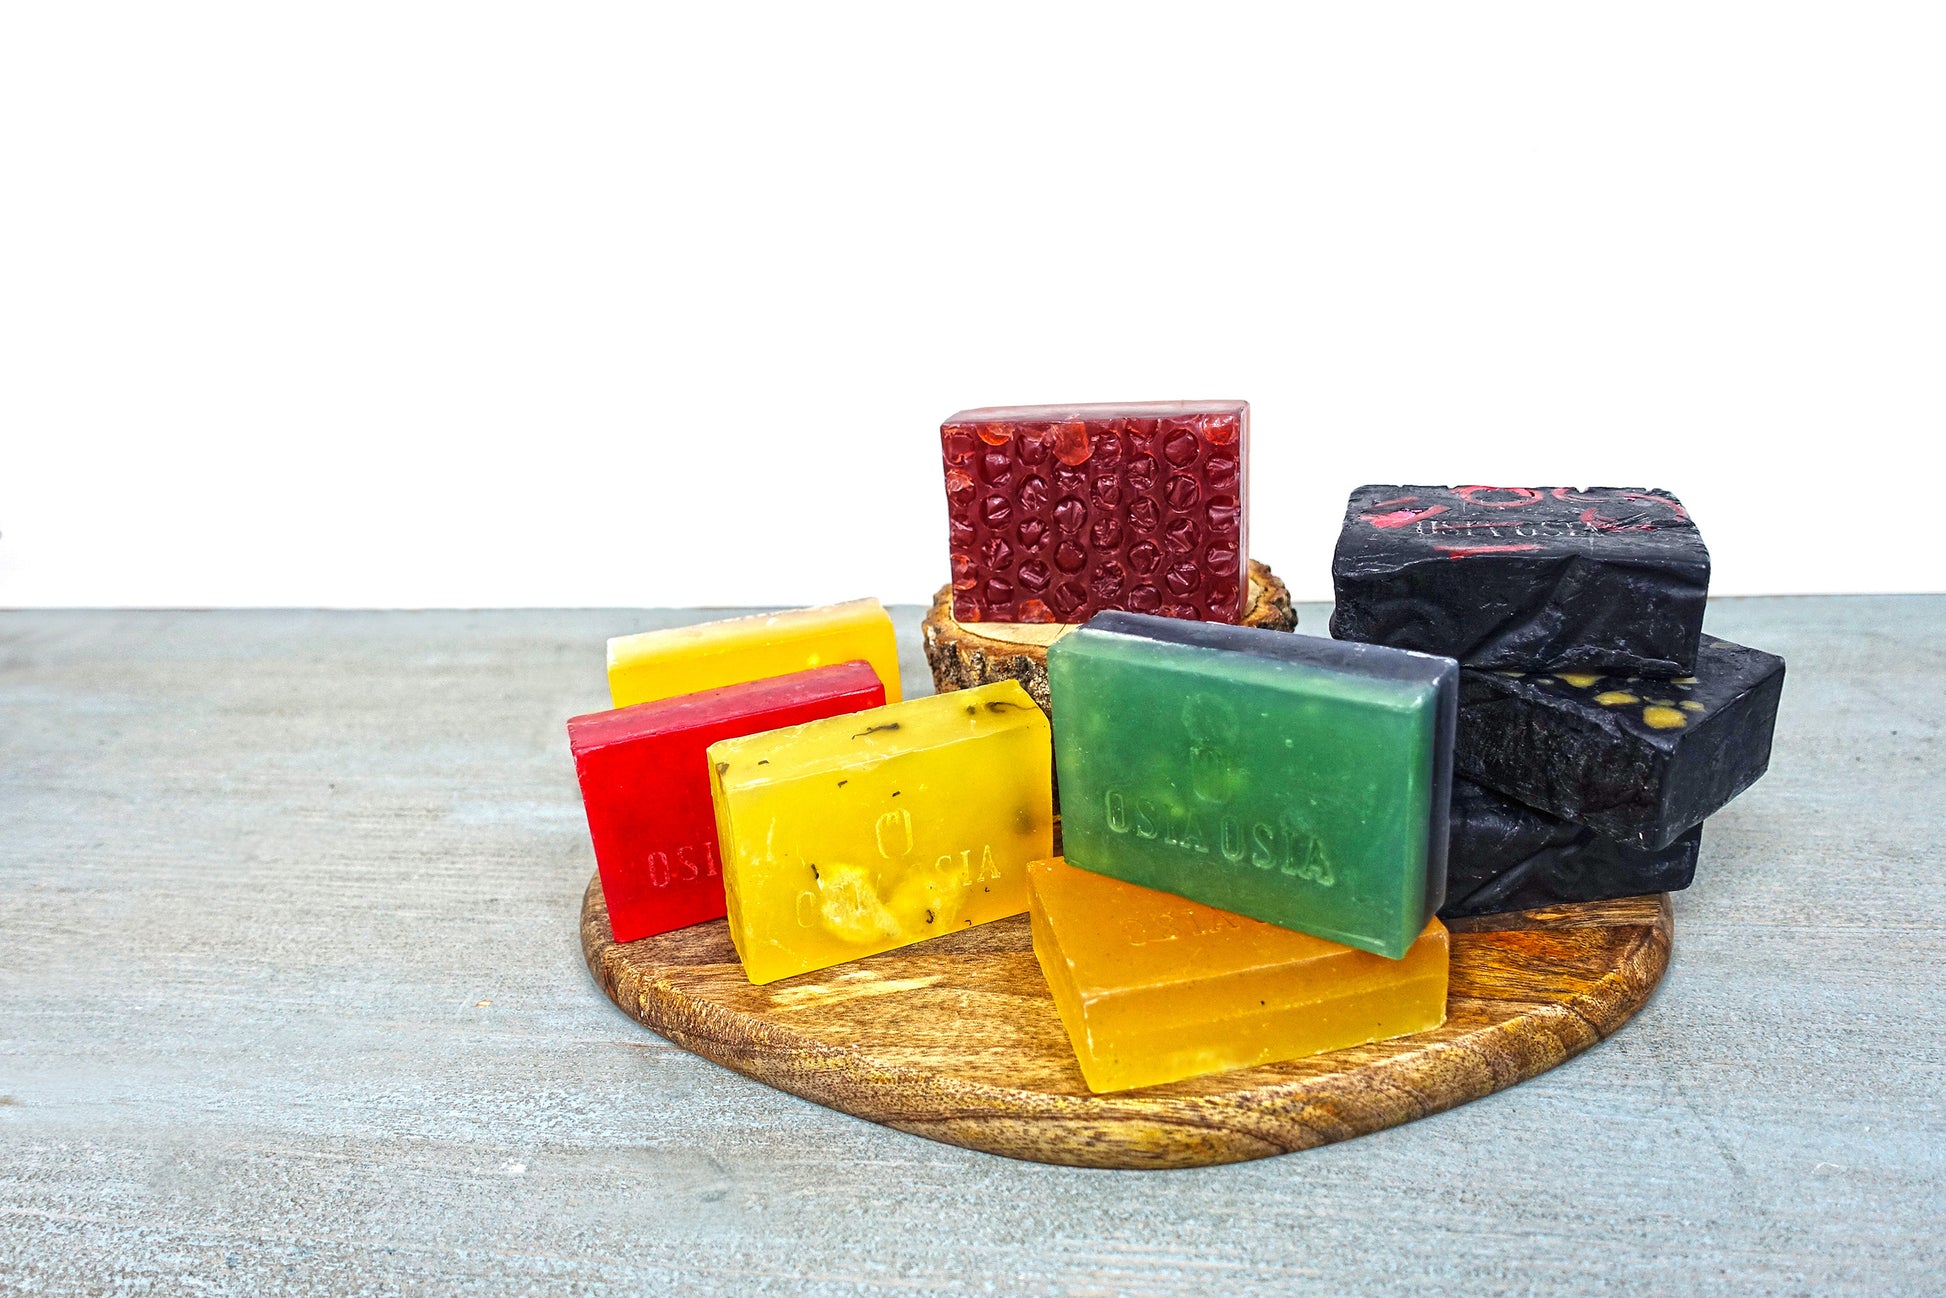 Kumkumadi Oil with Saffron Handcrafted Luxury Herbal Soap 藏紅花 Kumkumadi 精油手工芳療皂